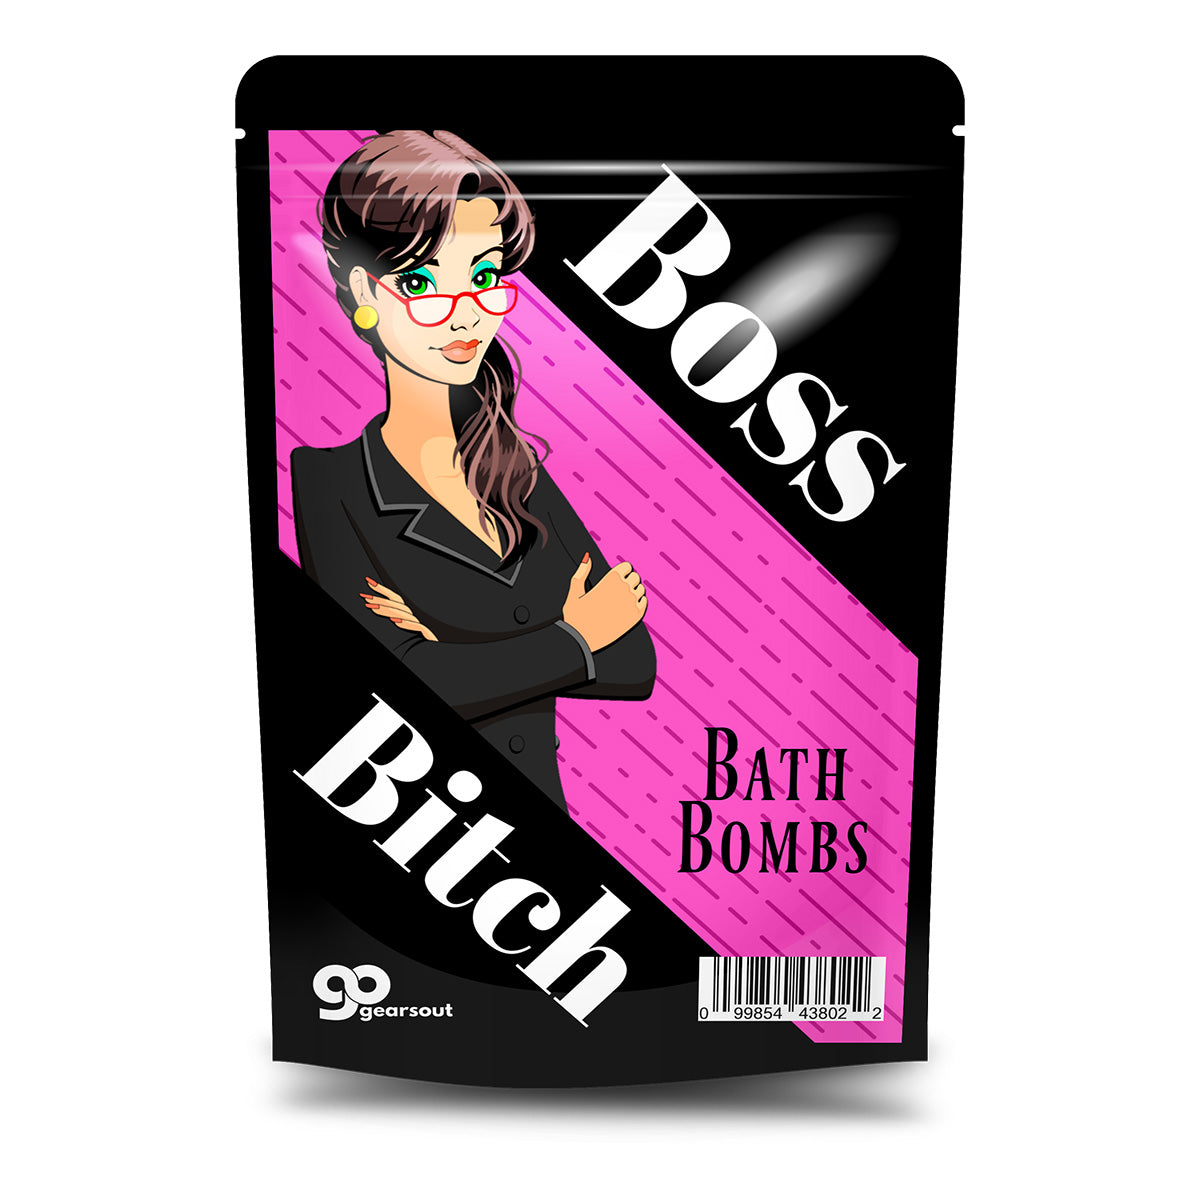 Boss Bitch Bath Bombs